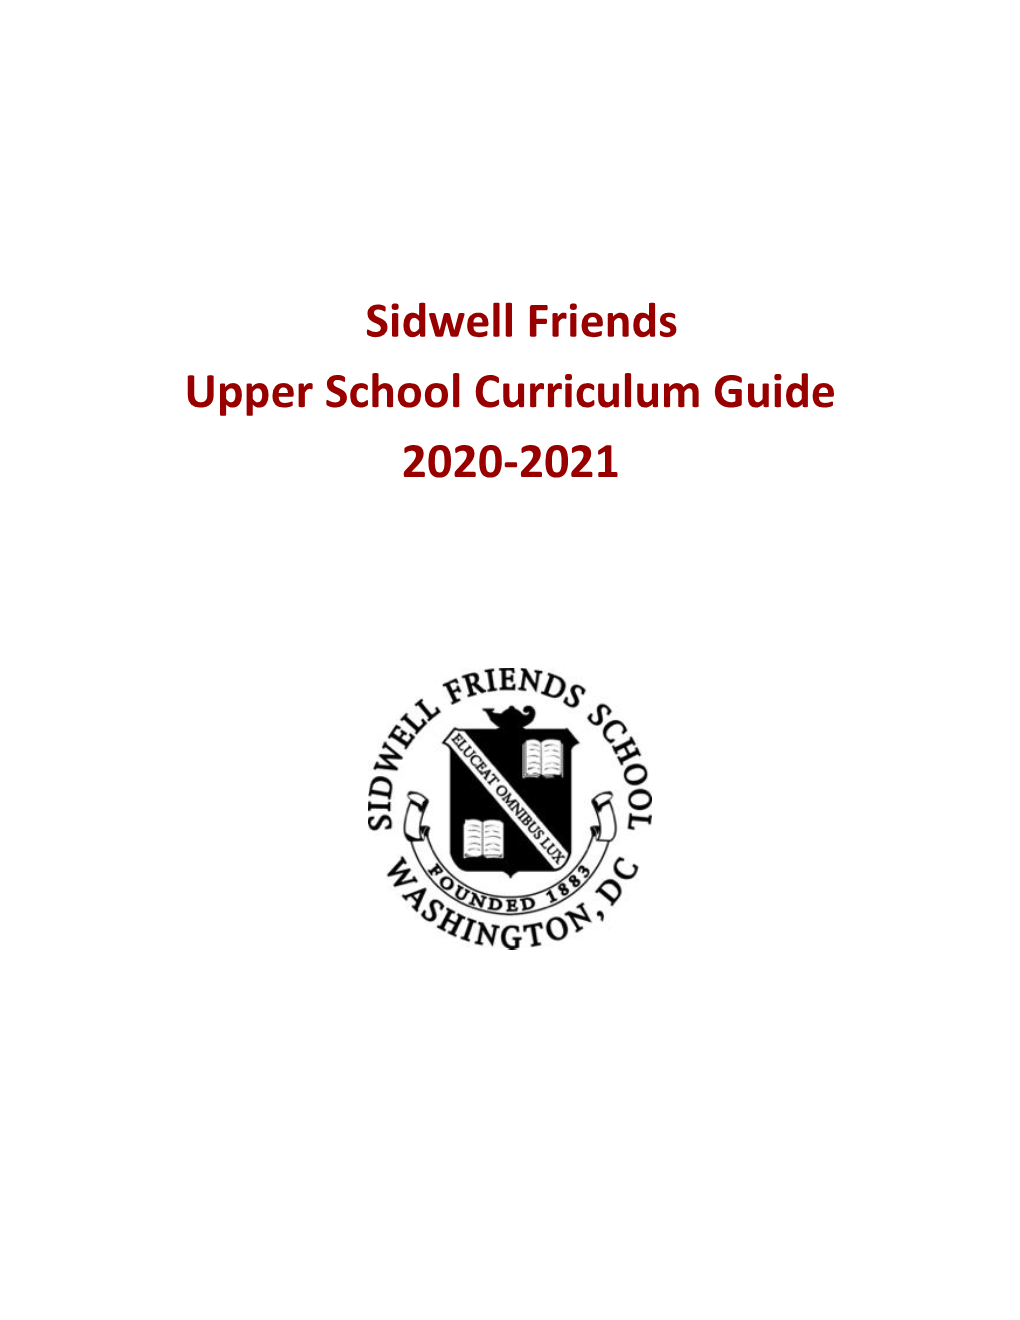 Sidwell Friends Upper School Curriculum Guide 2020-2021